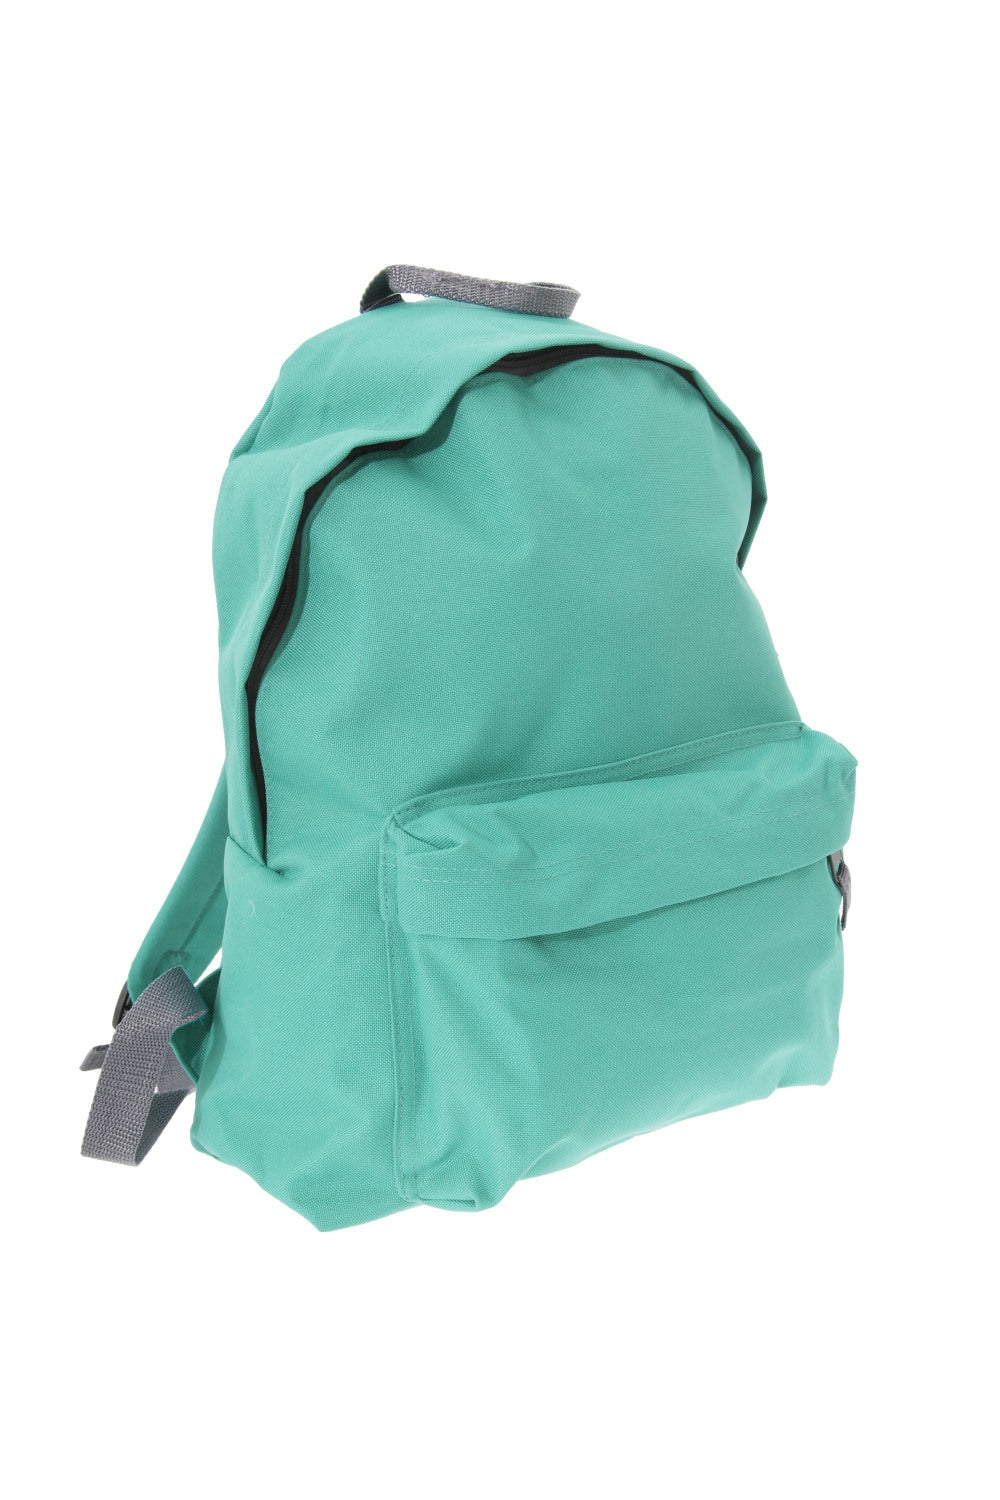 Rucksack Fashion Backpack, 18 Liters - Mint/Light Gray